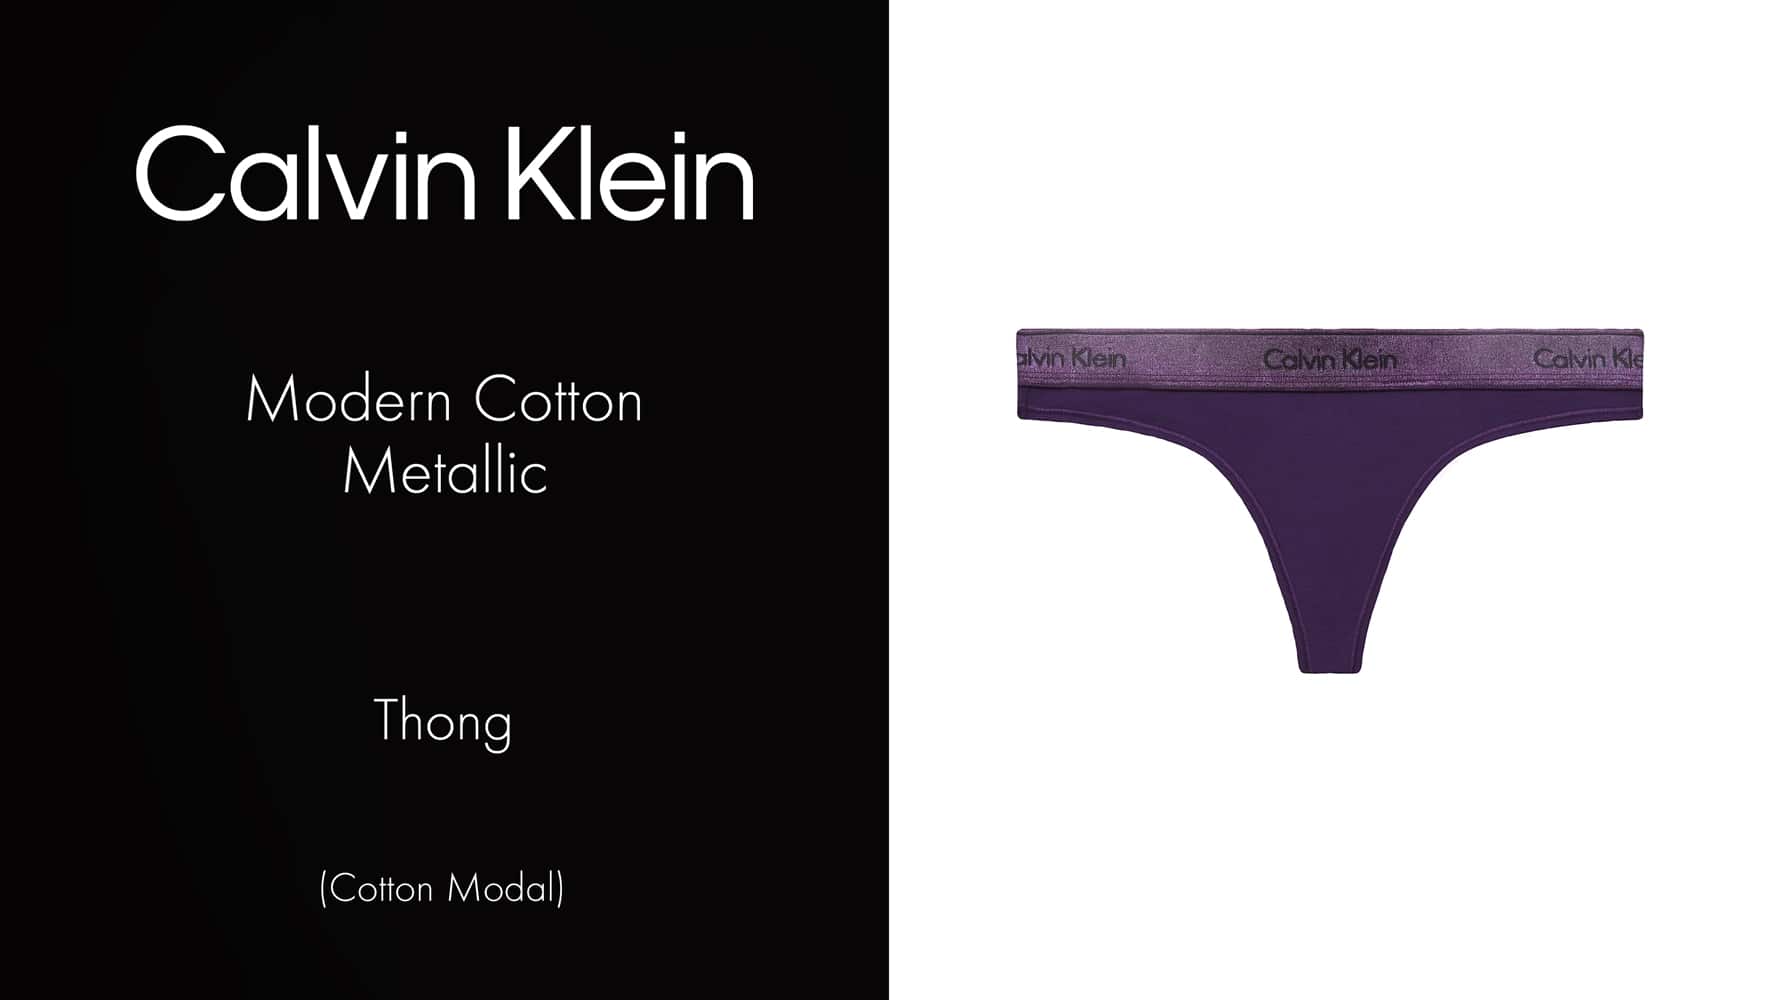 Thong - Modern Cotton